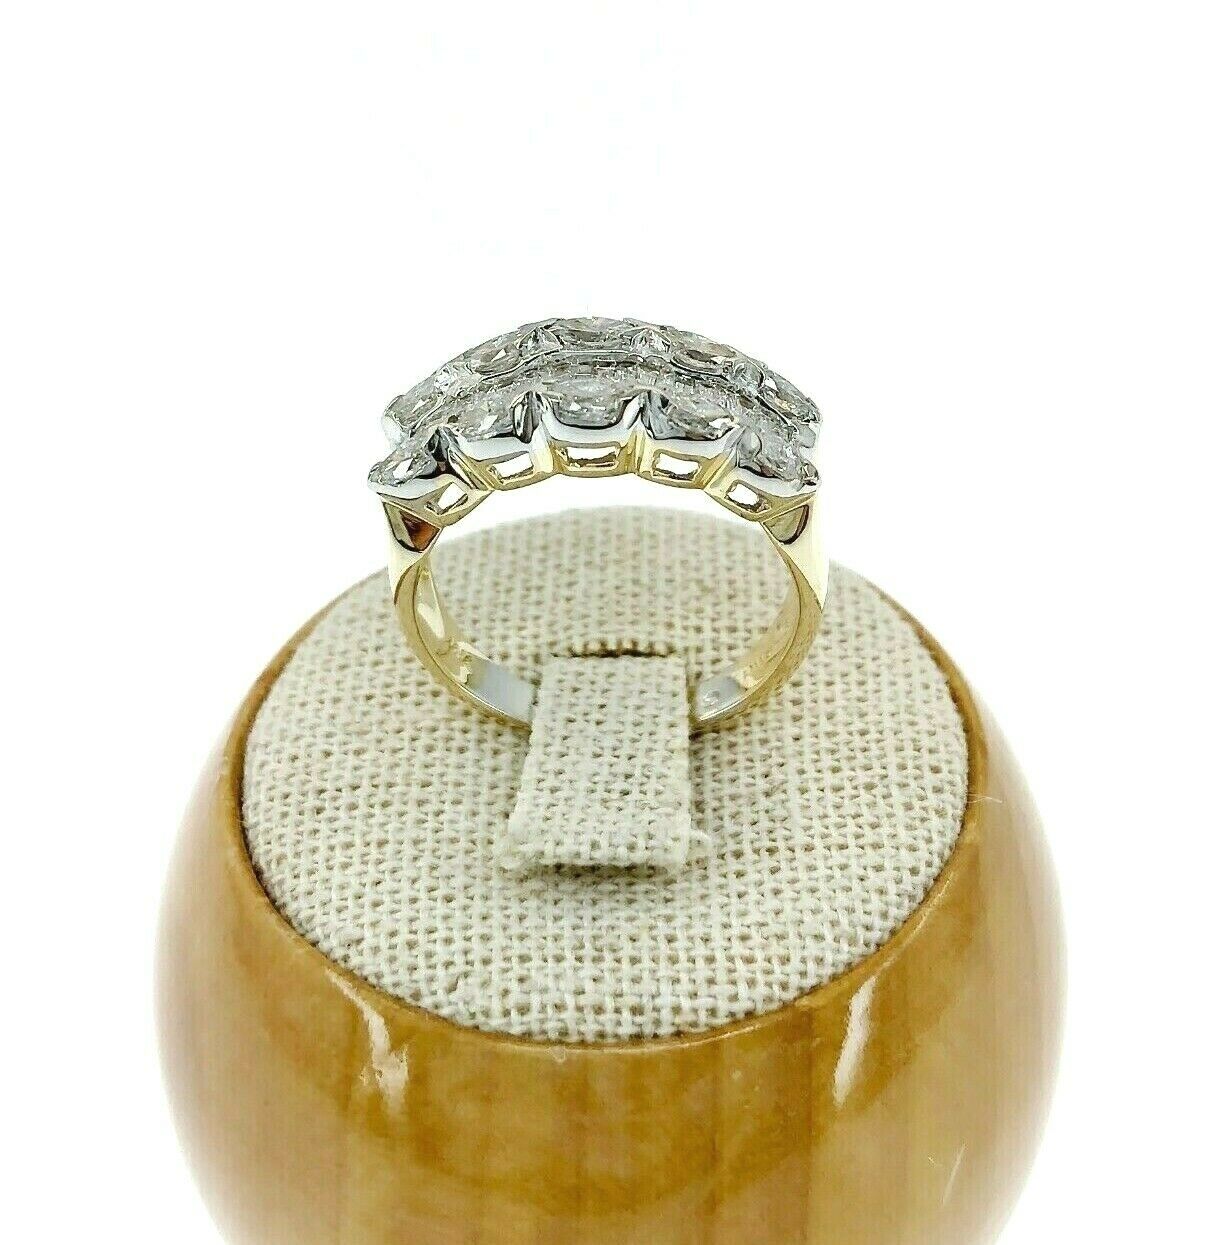 1.15 Carats Marquise & Baguette Diamond Celebration/Anniversary Ring 14K 2 Tone